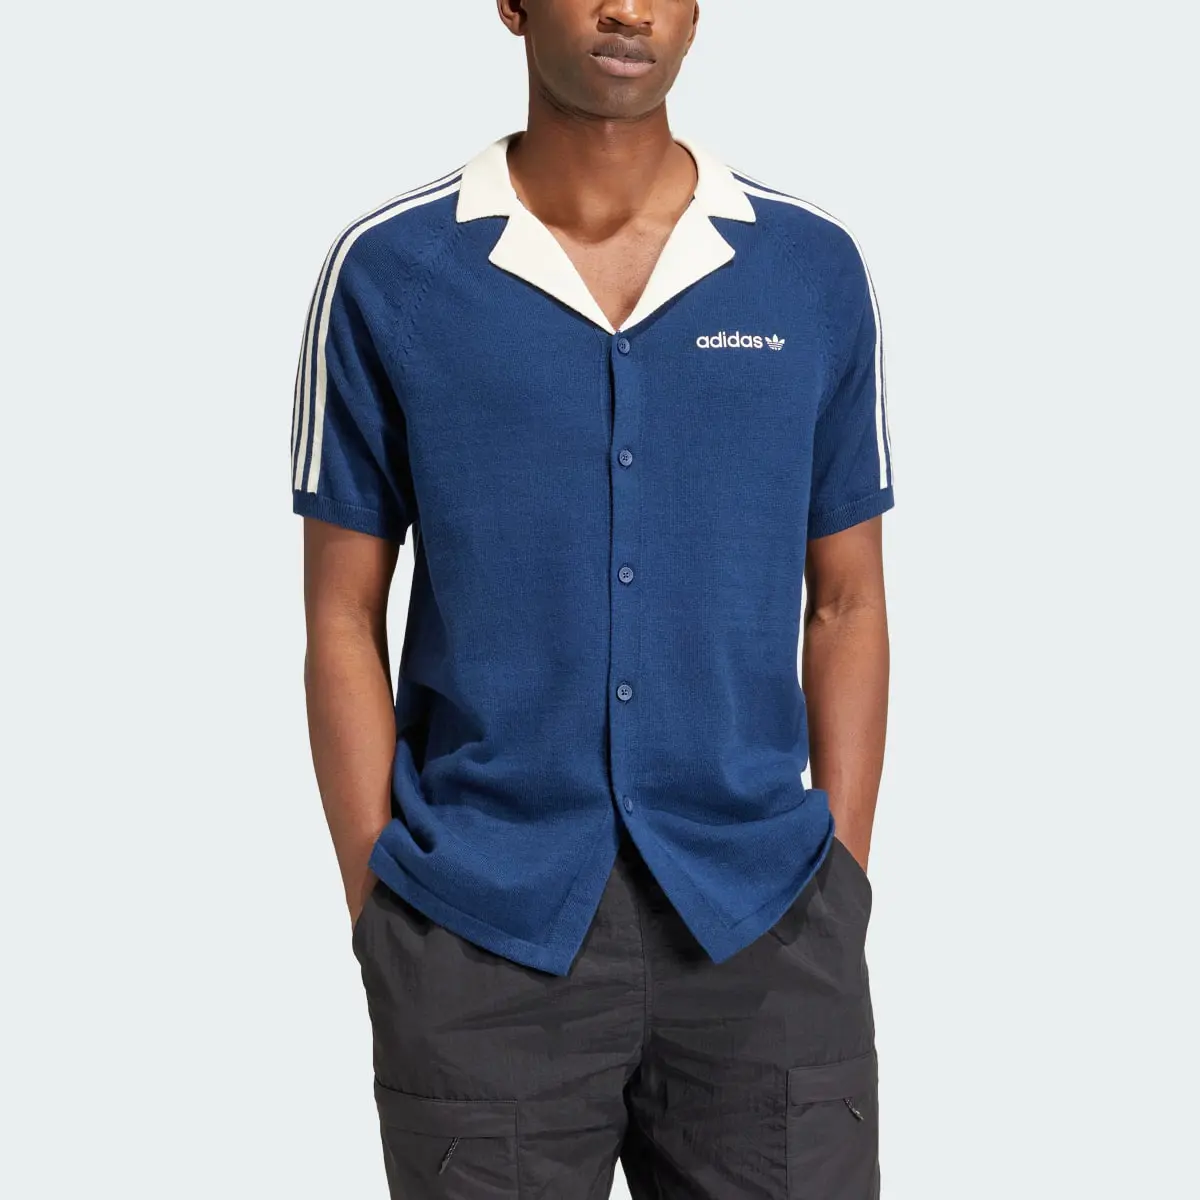 Adidas T-shirt Premium Knitted. 1